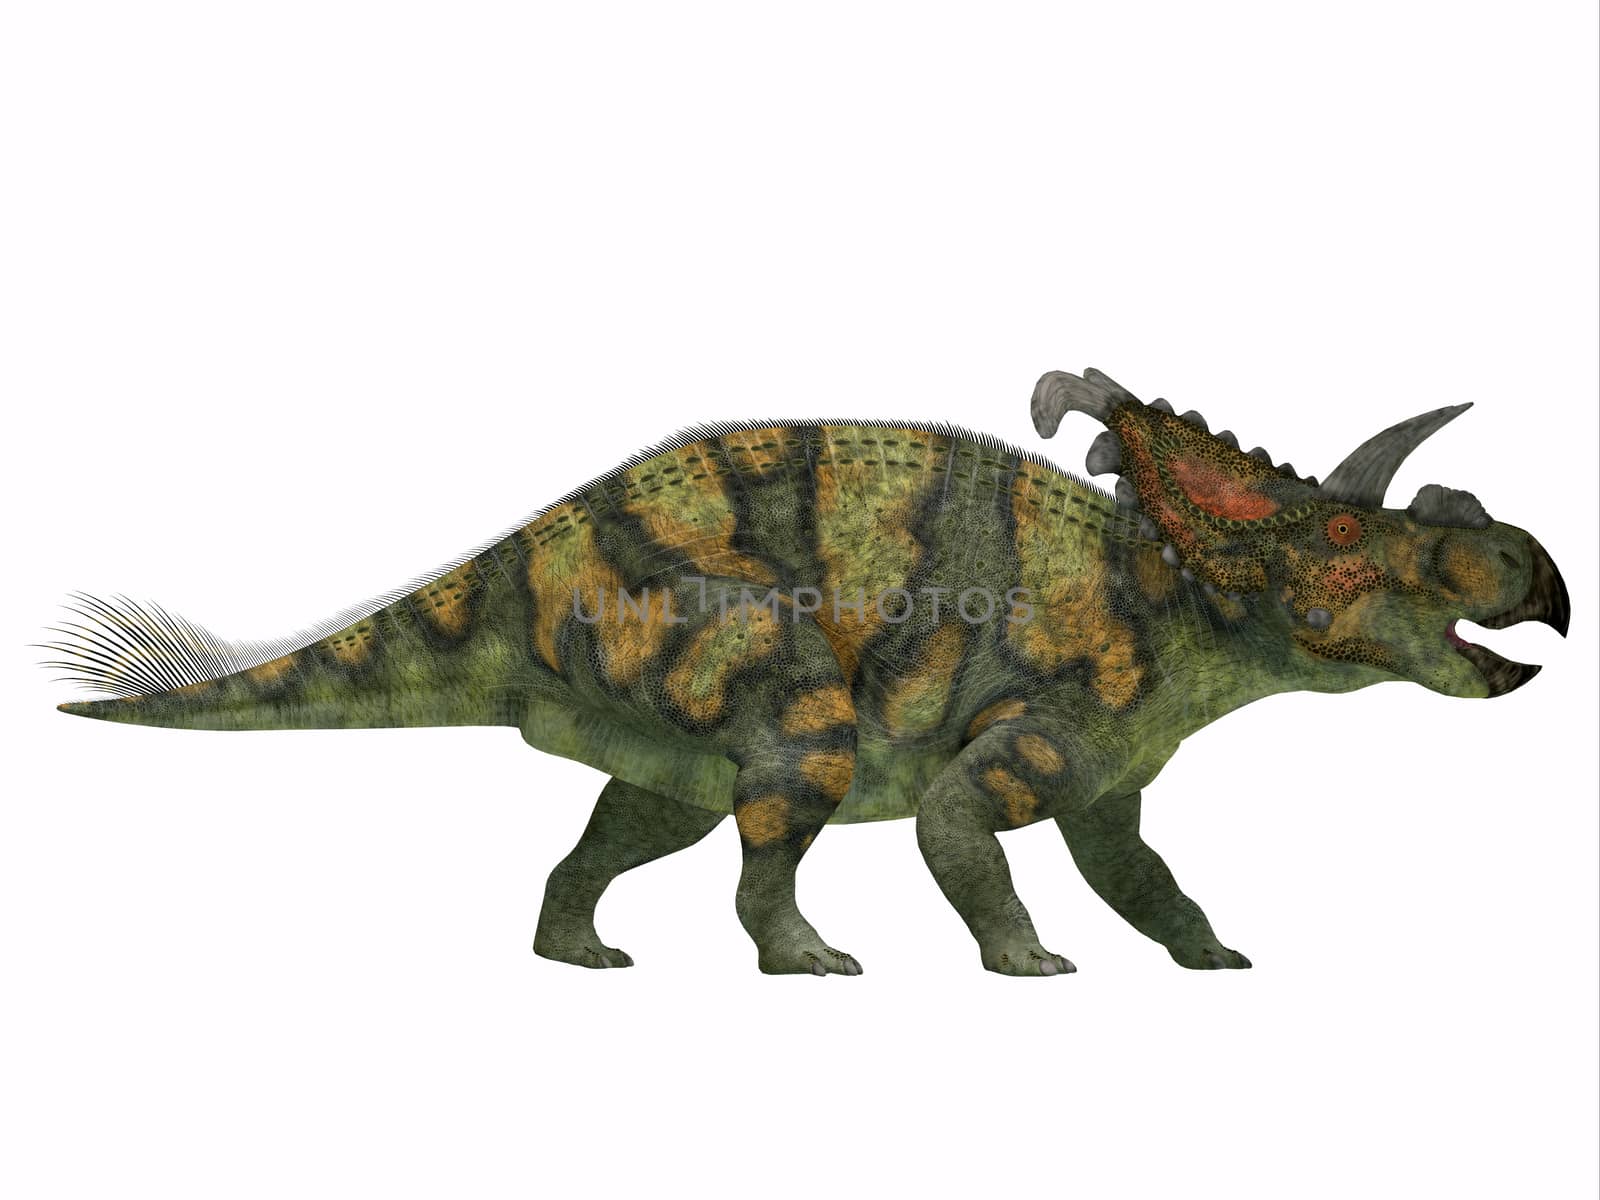 Albertaceratops was a member of ceratopsian dinosaur from the Upper Cretaceous Era.